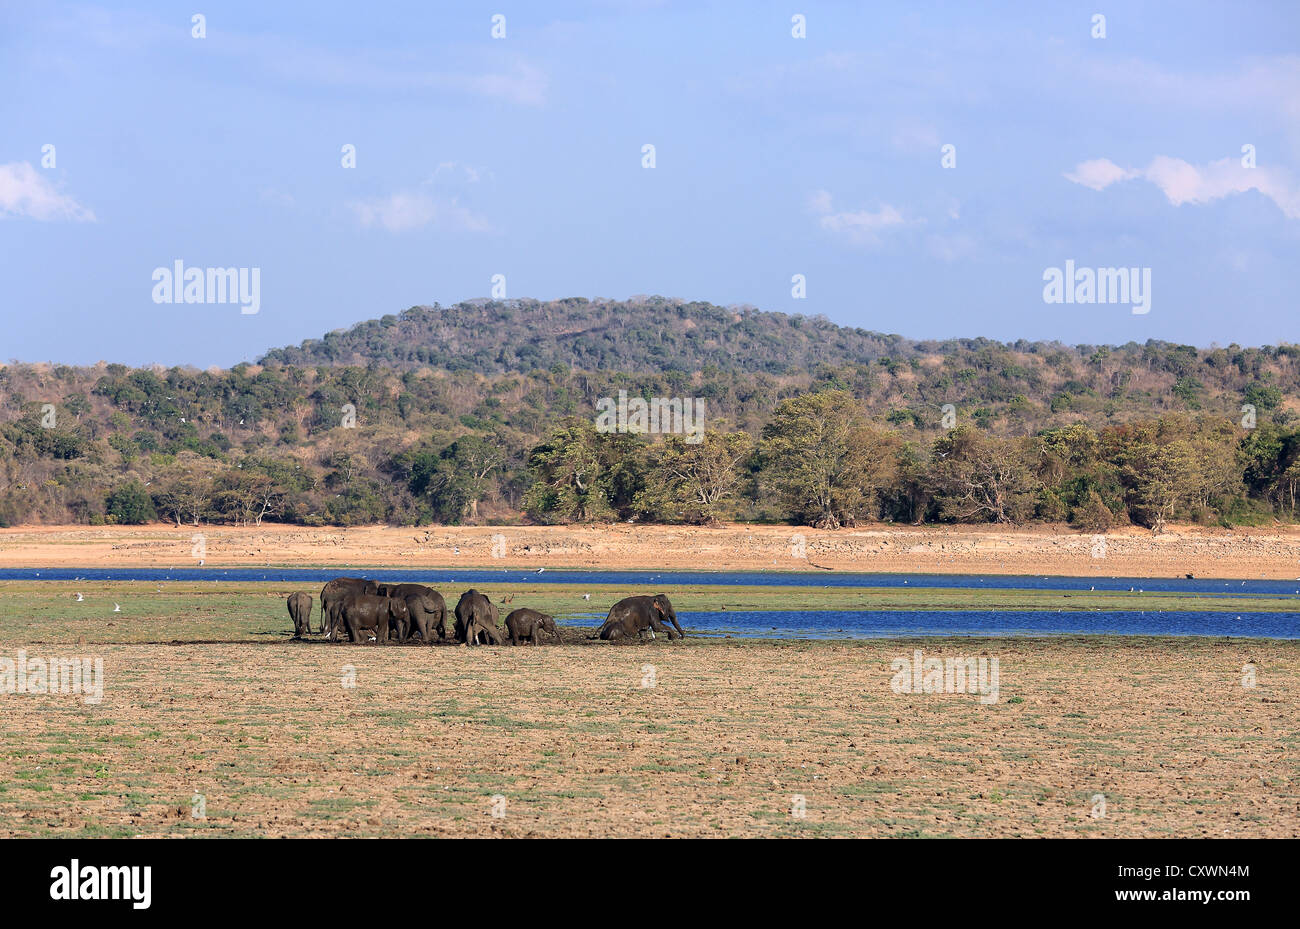 Herd of elephants bathing in a lagoon in Minneriya National Park, Sri Lanka. Stock Photo